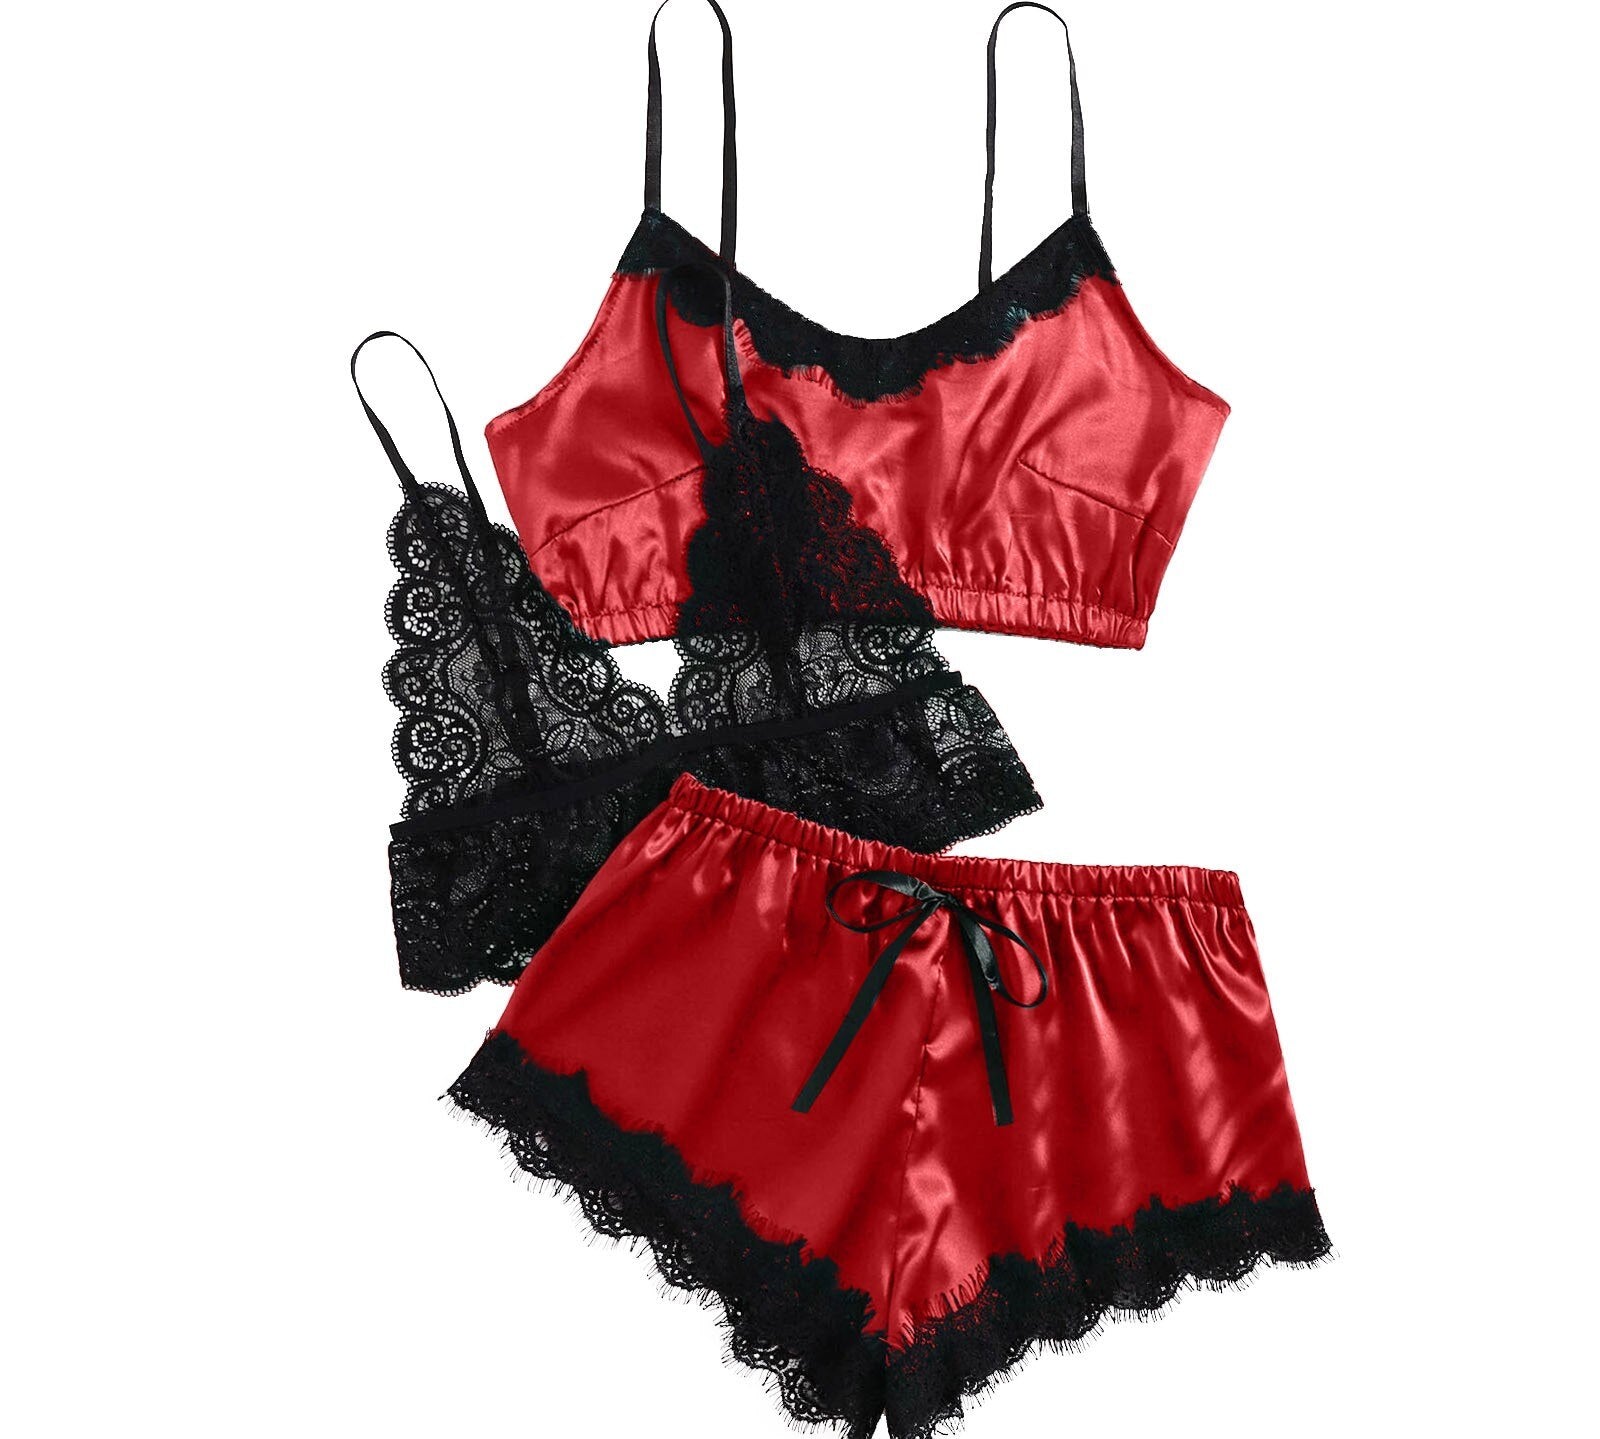 Red Moon - 3PC Satin Lace Sleepwear